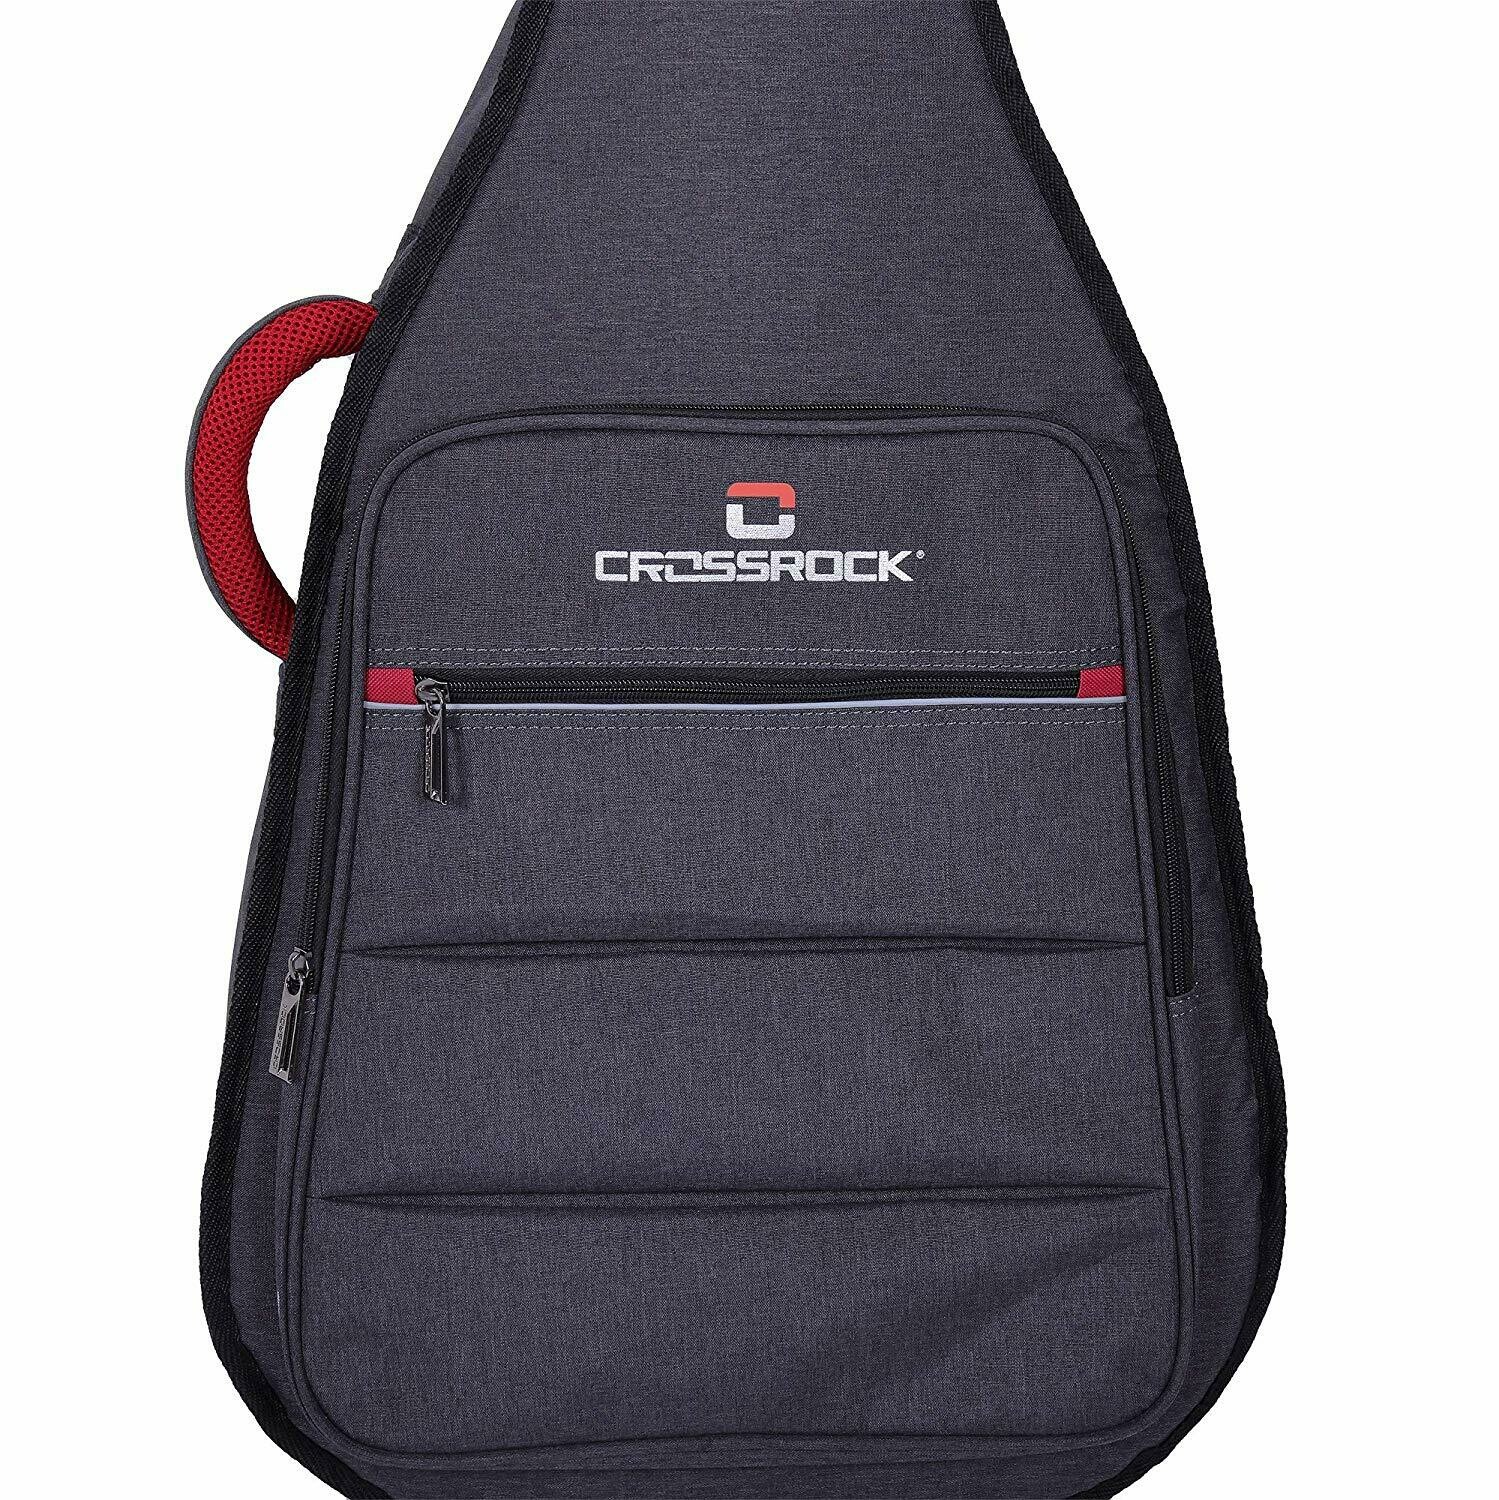 Backpack Straps for Easy Transport